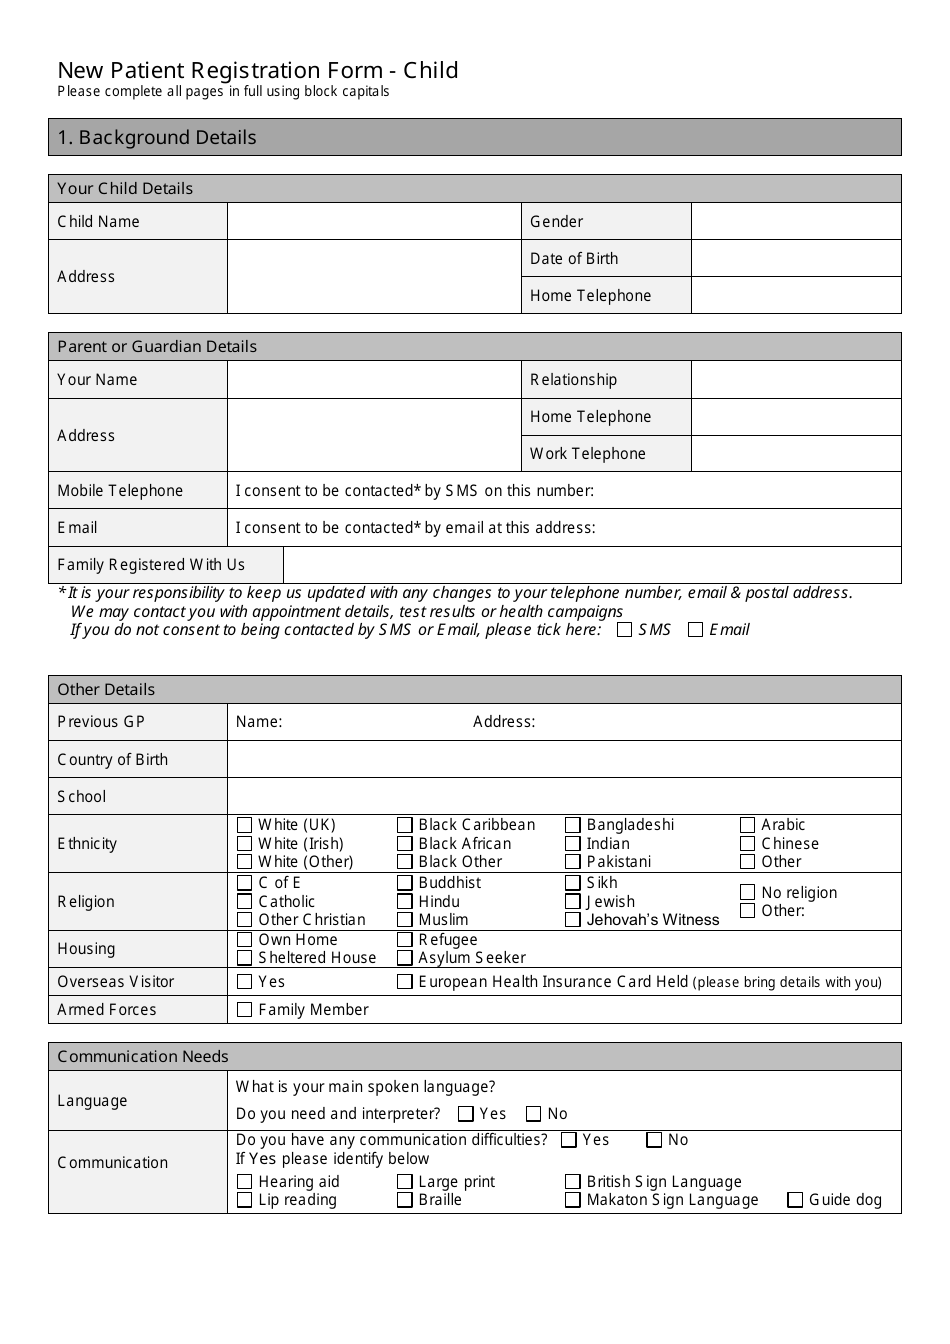 New Patient Registration Form - Child - United Kingdom, Page 1